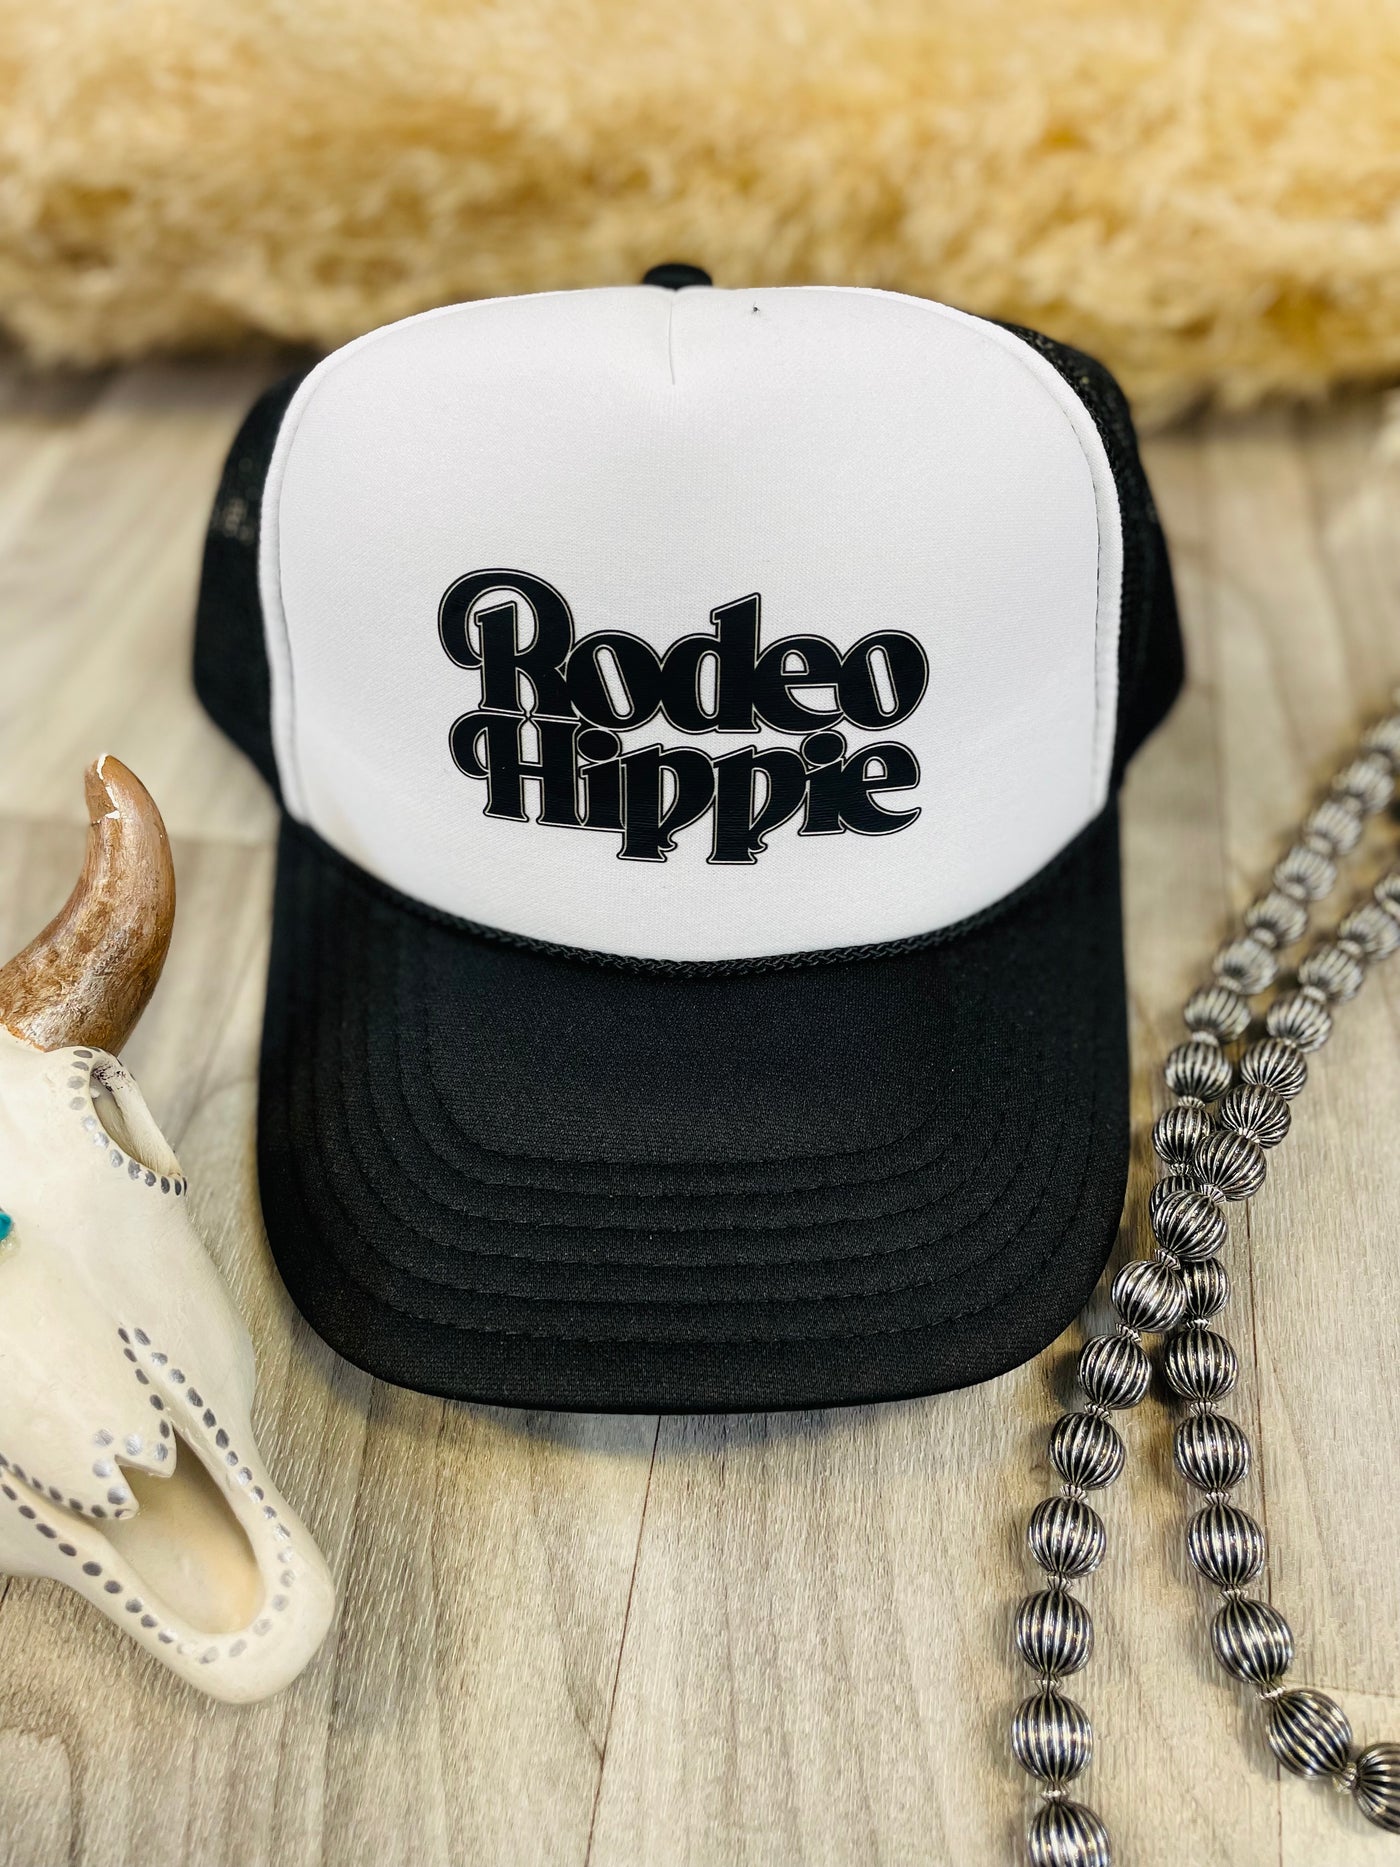 The Rodeo Hippie Trucker Hat